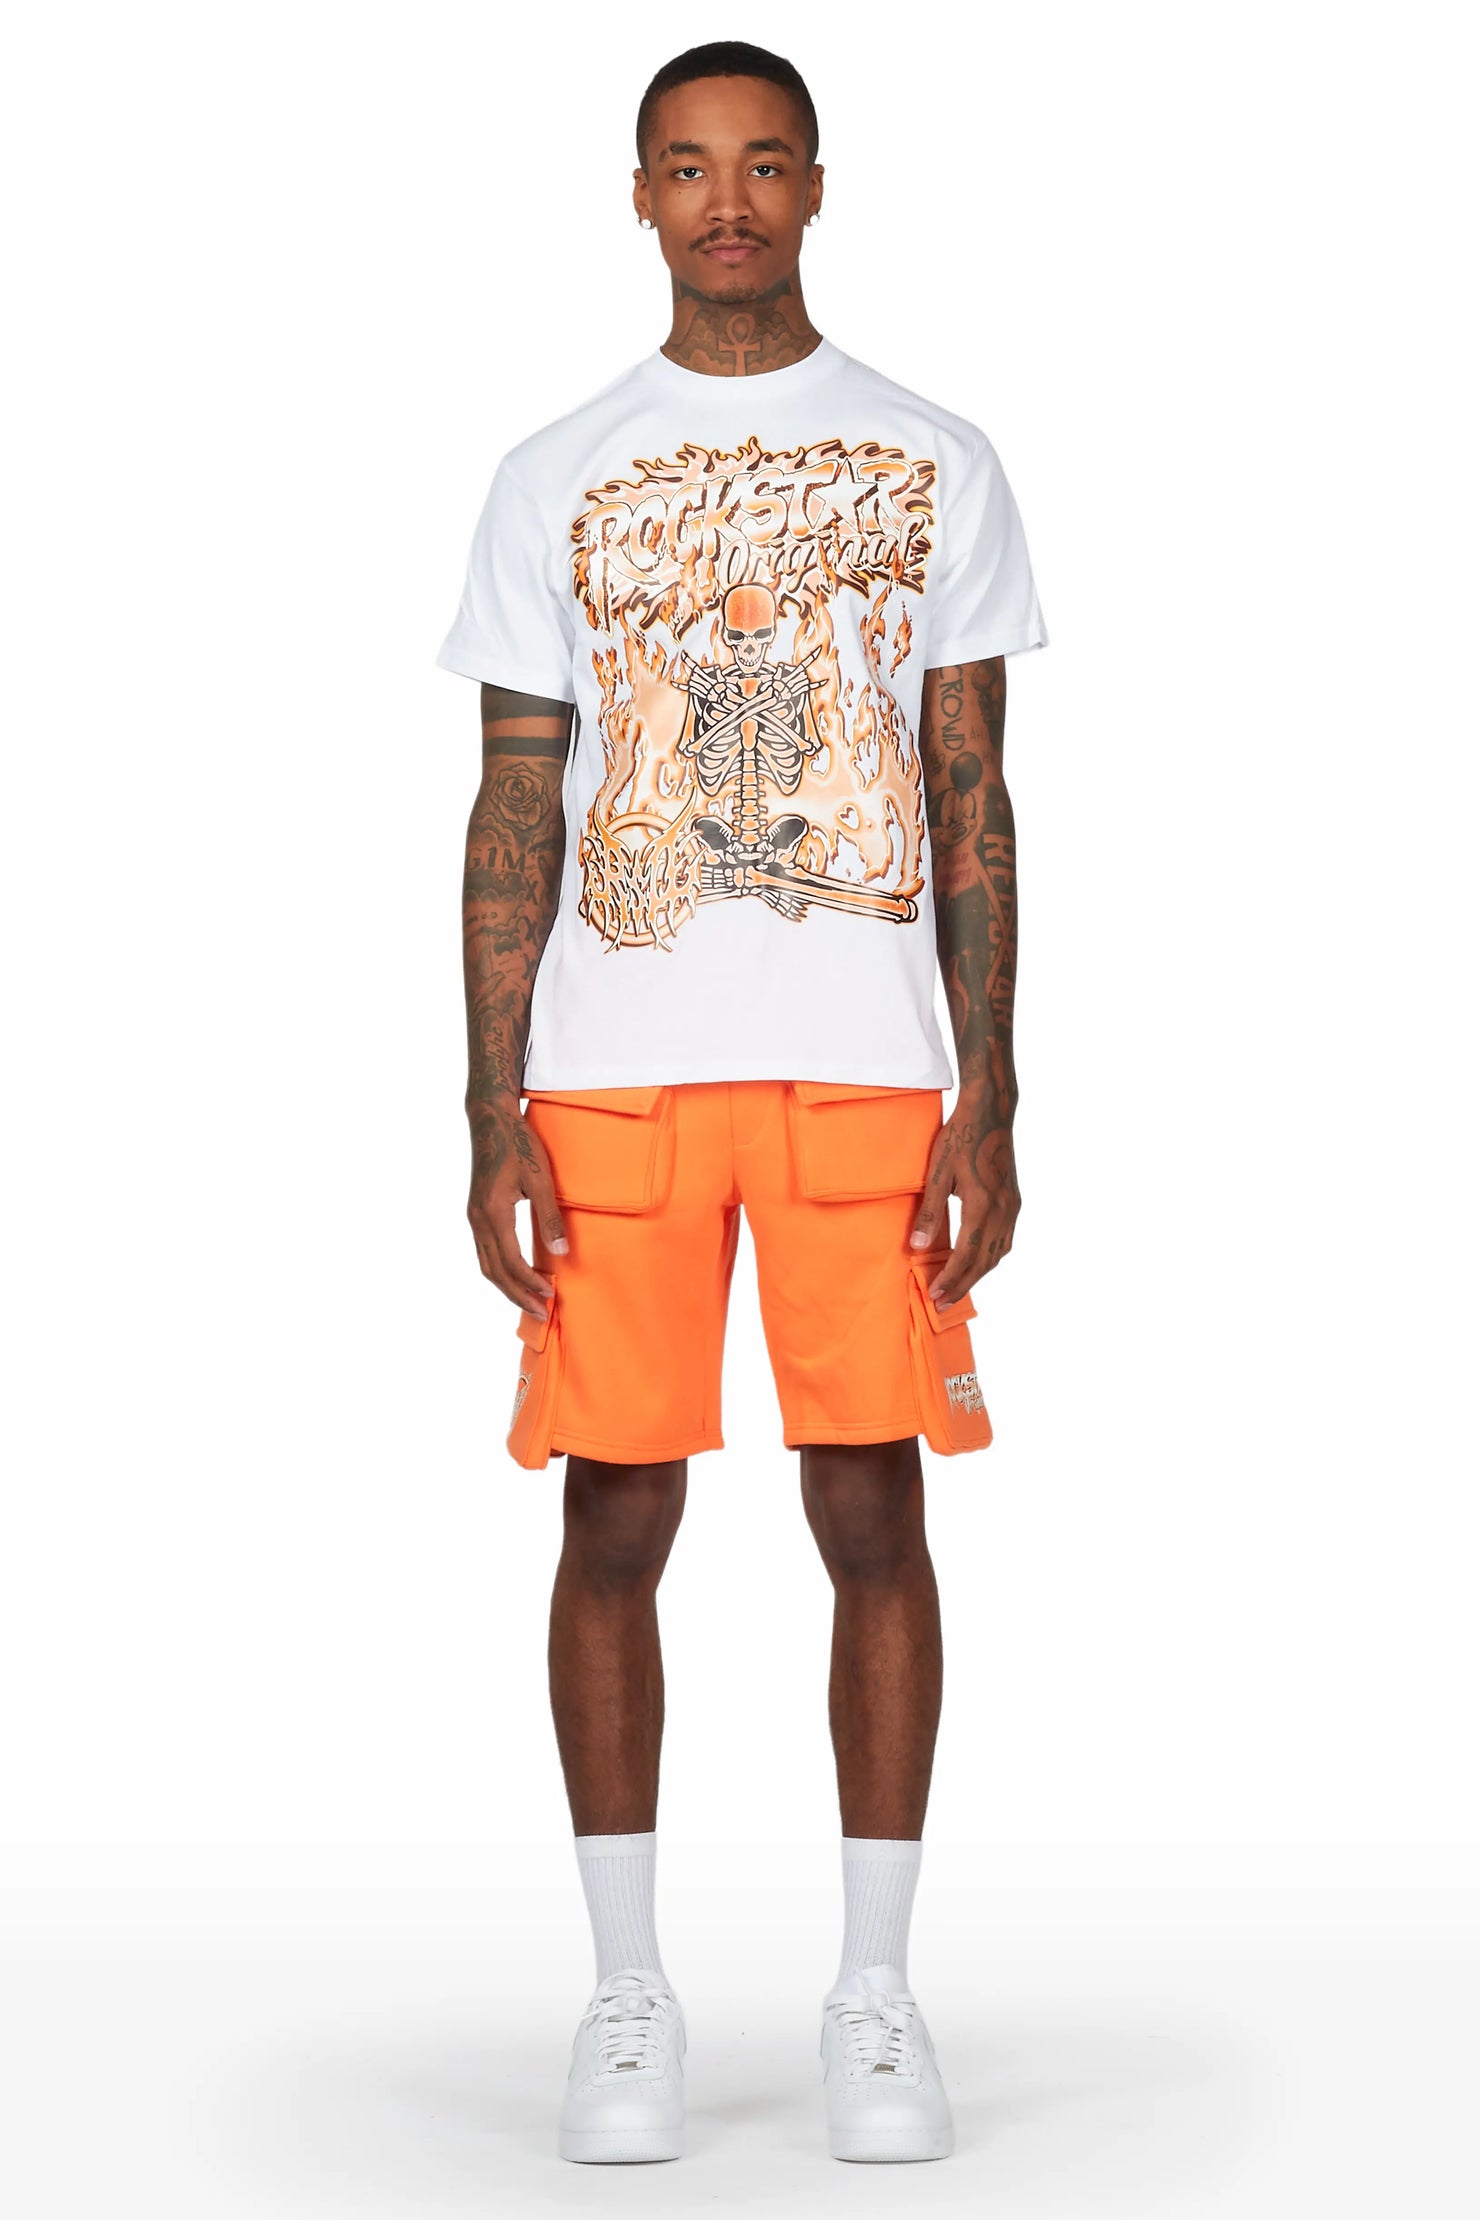 Yoga White/Orange T-Shirt Short Set